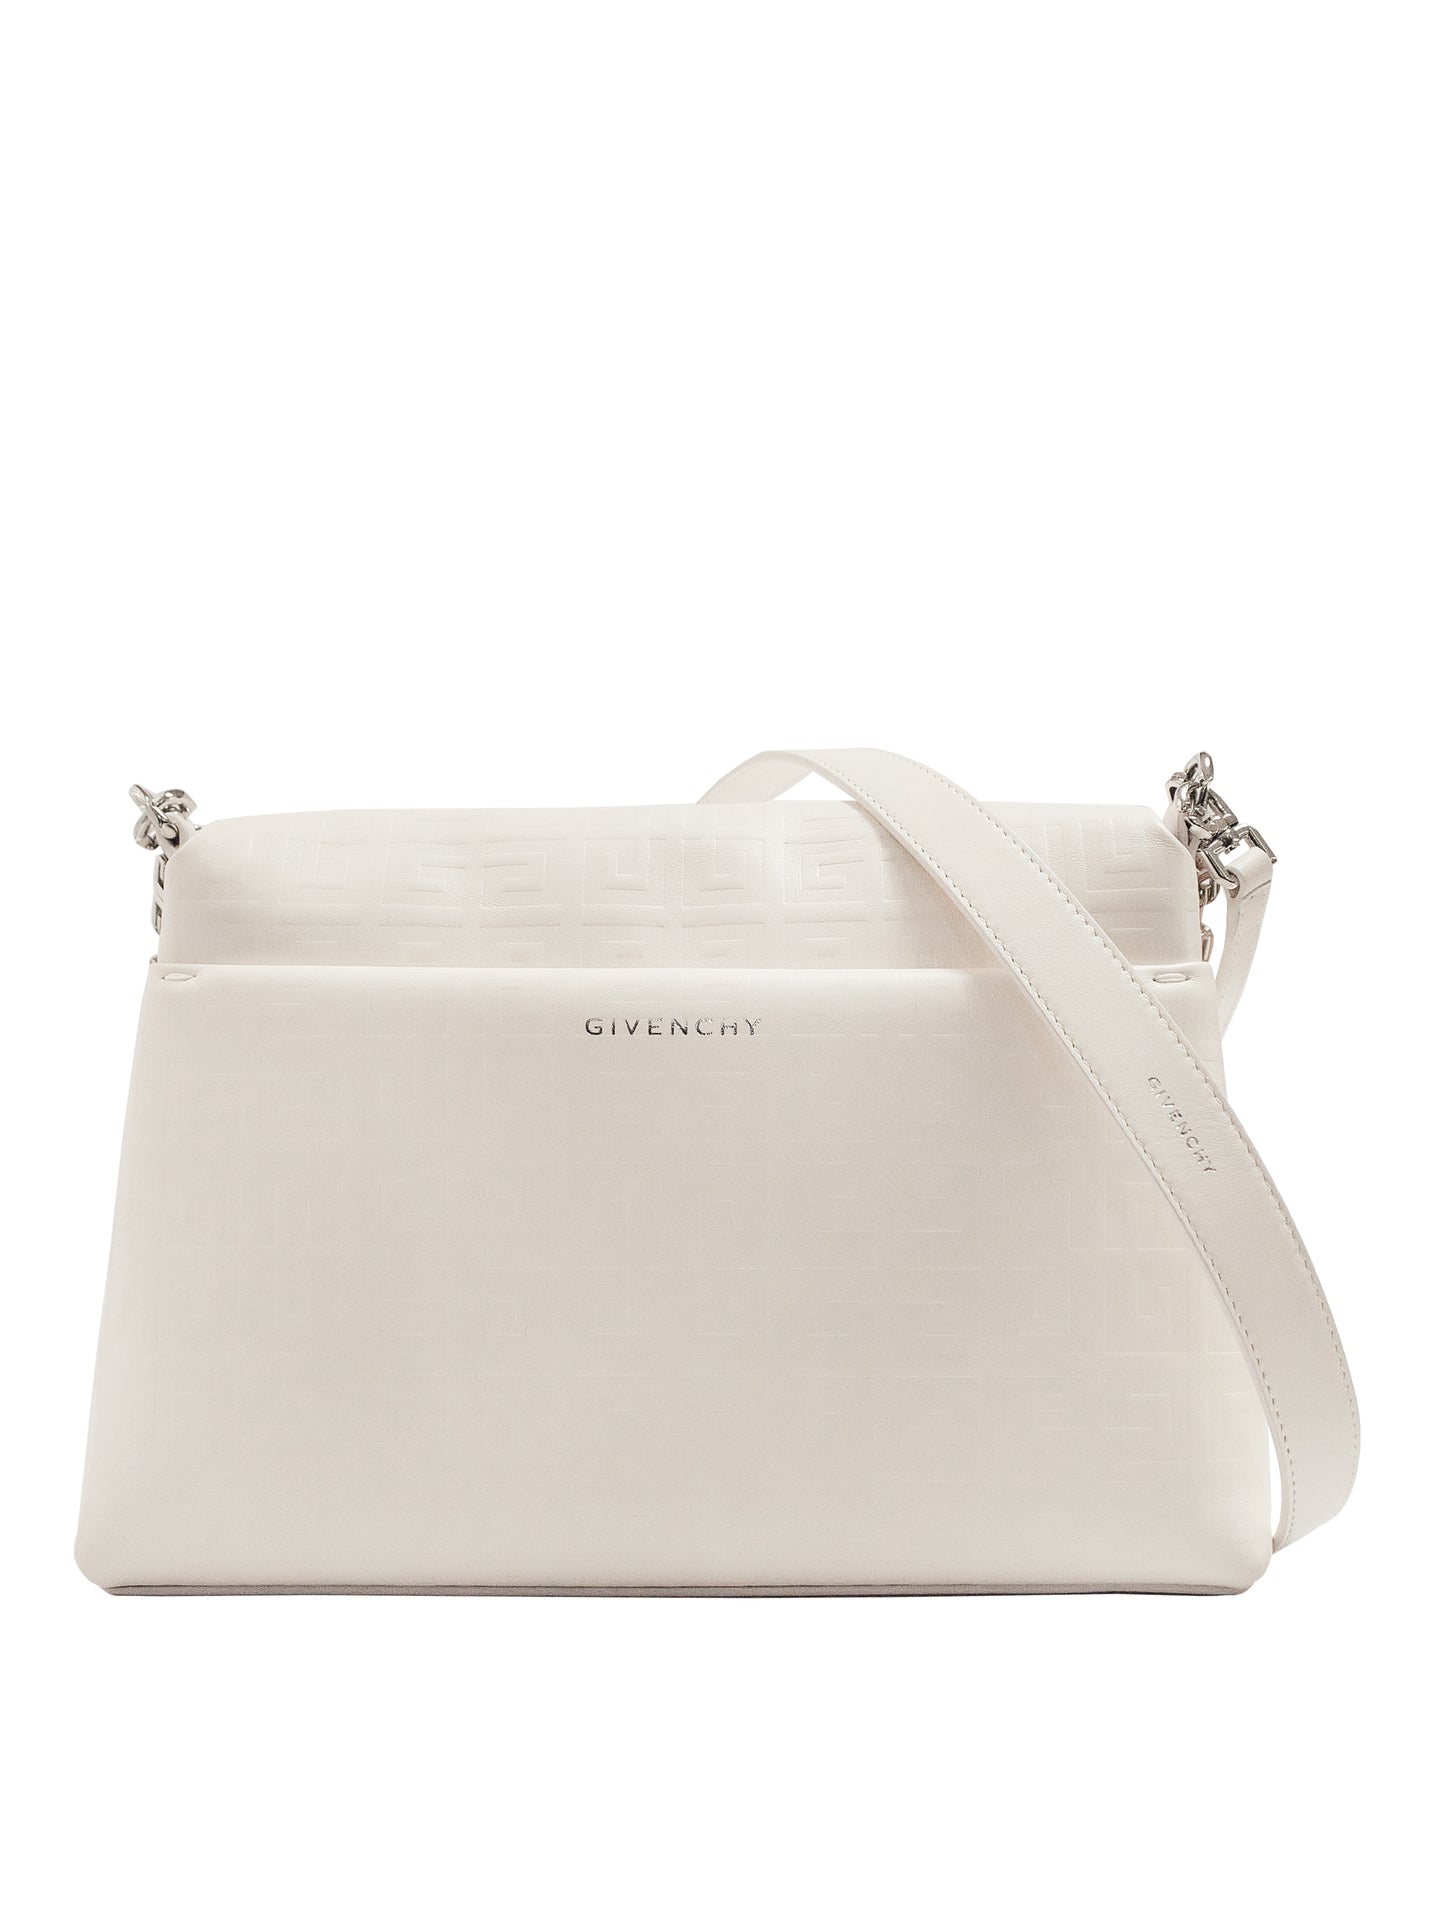 Givenchy Tasche 4G Soft Medium Weiss